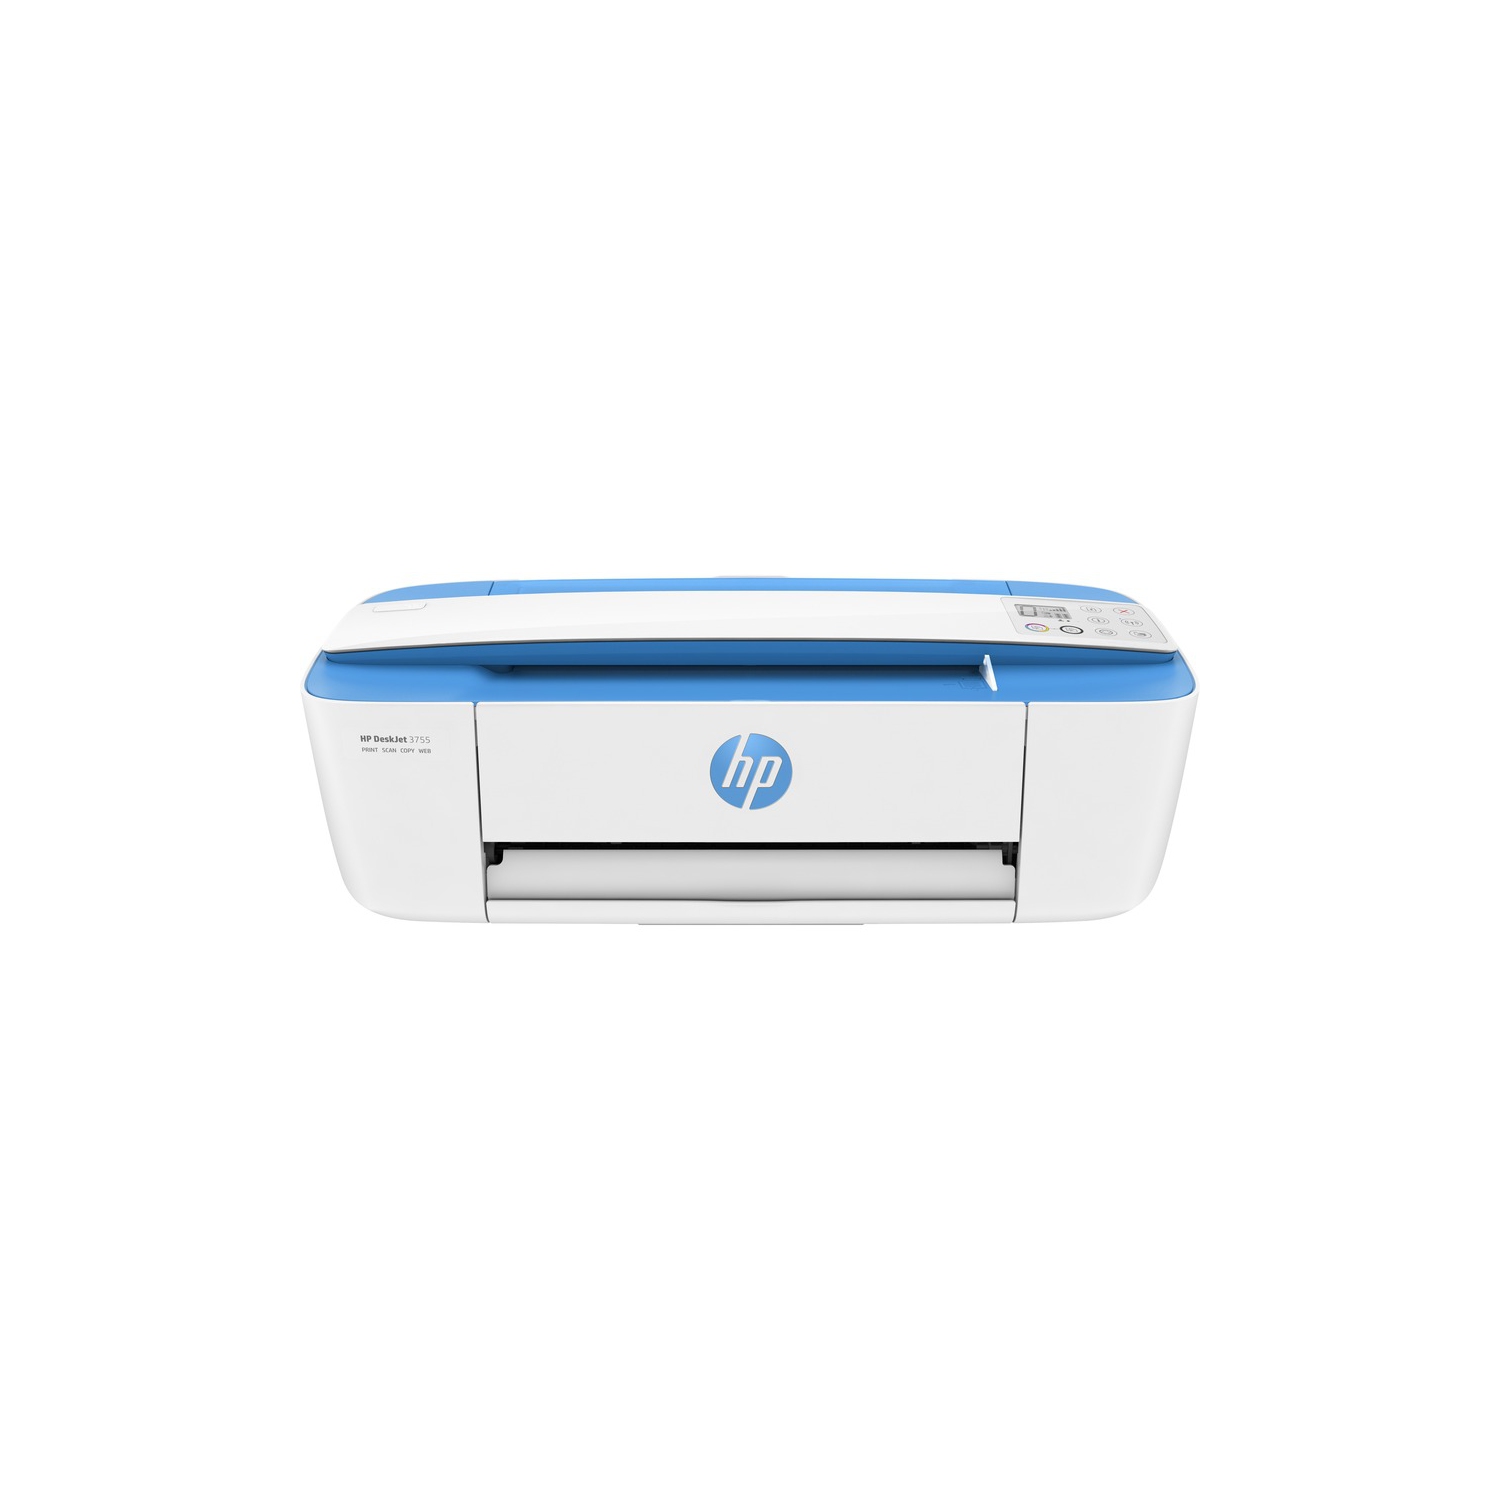 HP DeskJet 3755 All-in-One Printer J9V90A#B1H